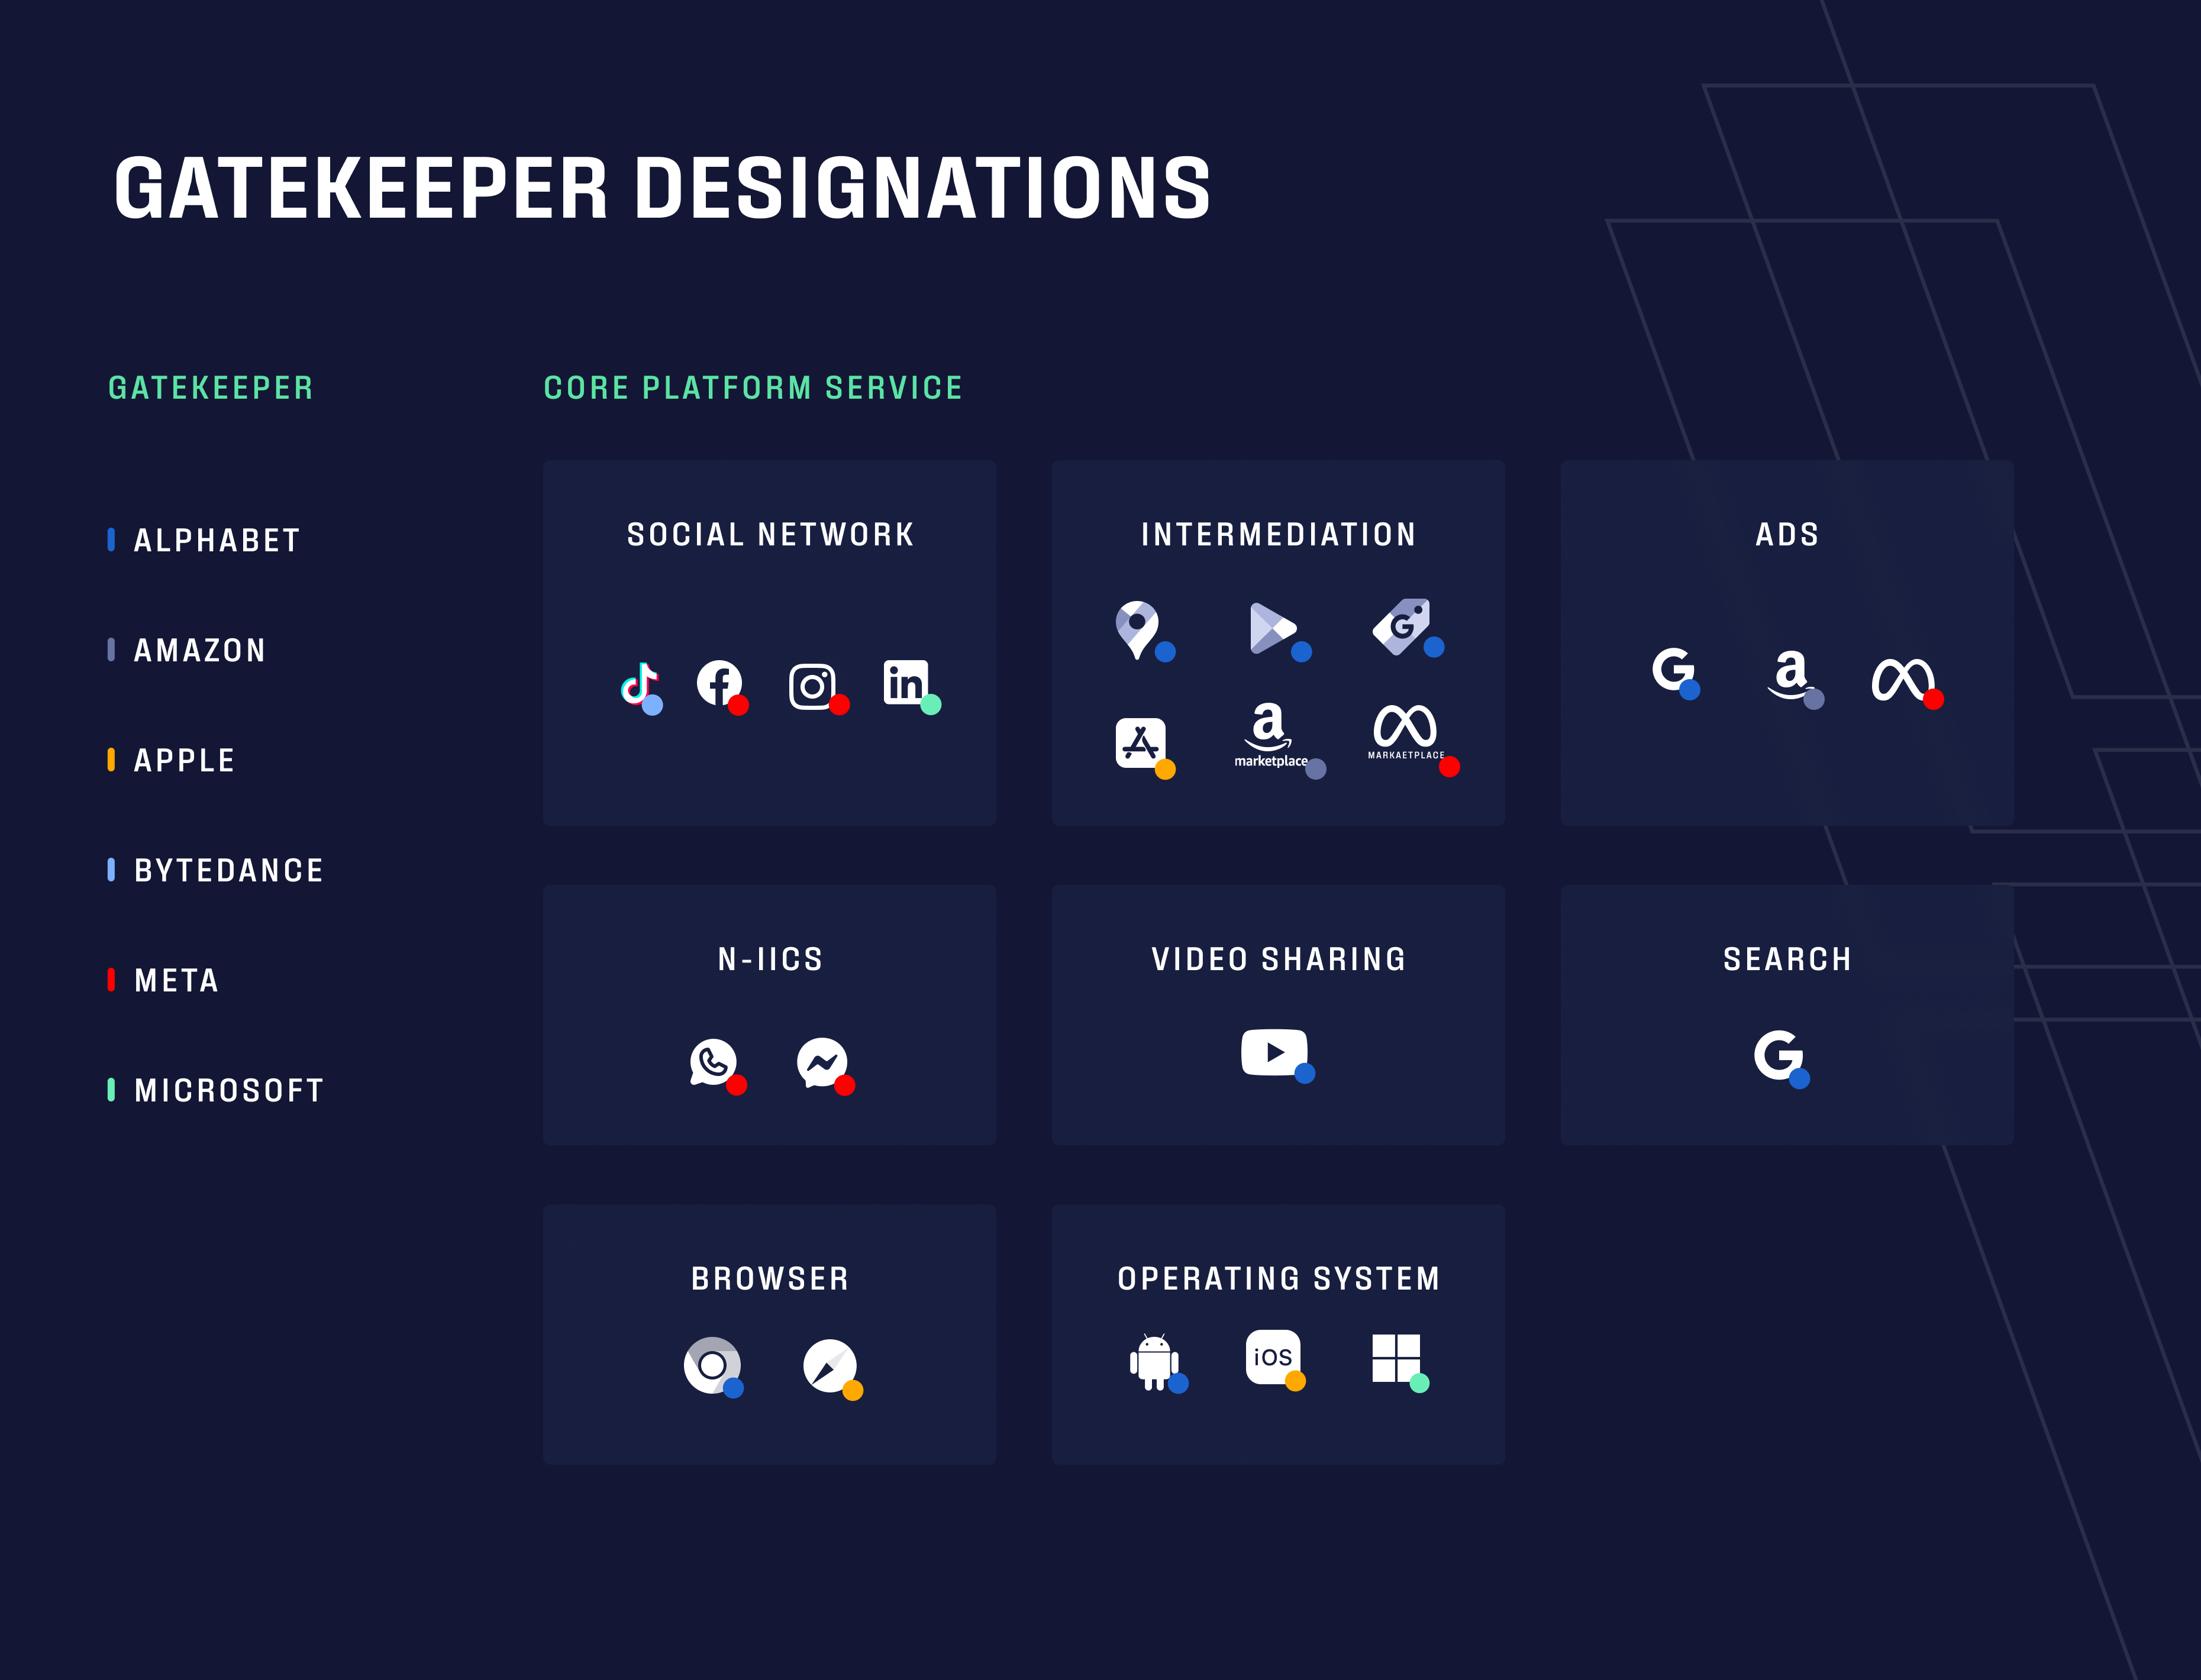 DMA gatekeeper designations